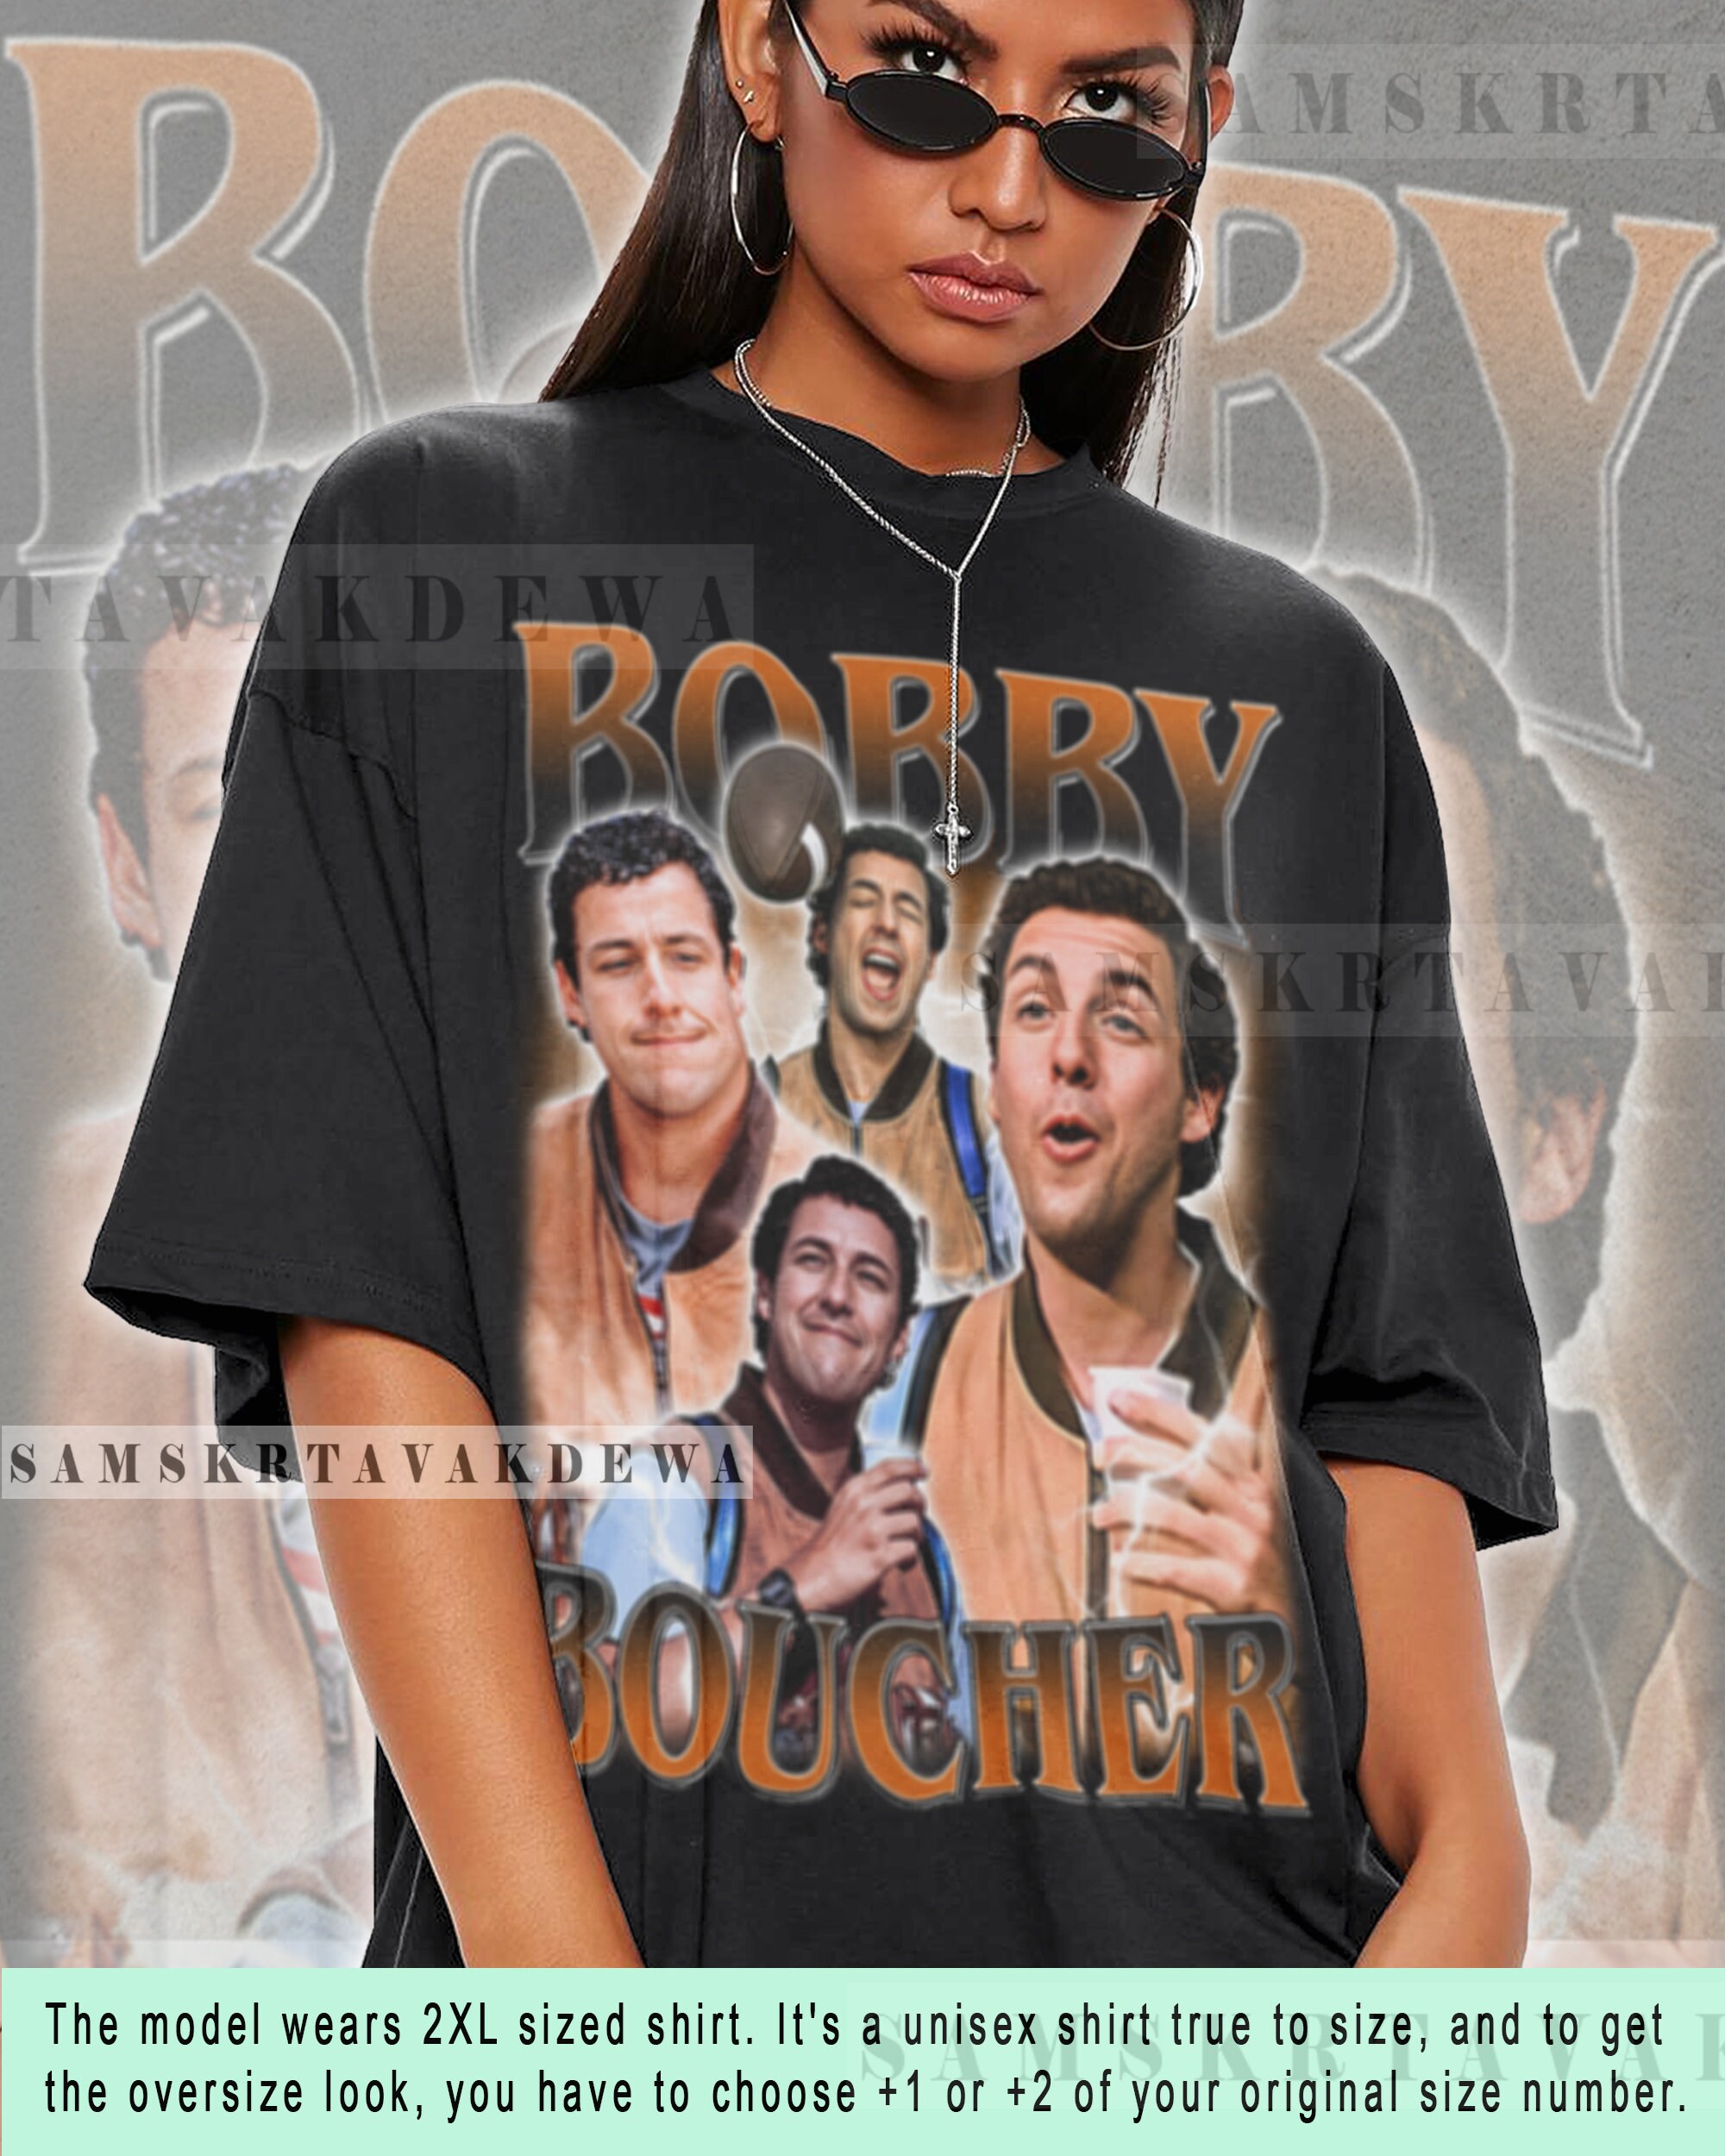 Bobby Boucher Adam Sandler Signed Bourbon Bowl The Waterboy Jersey Mud Dogs  Psa